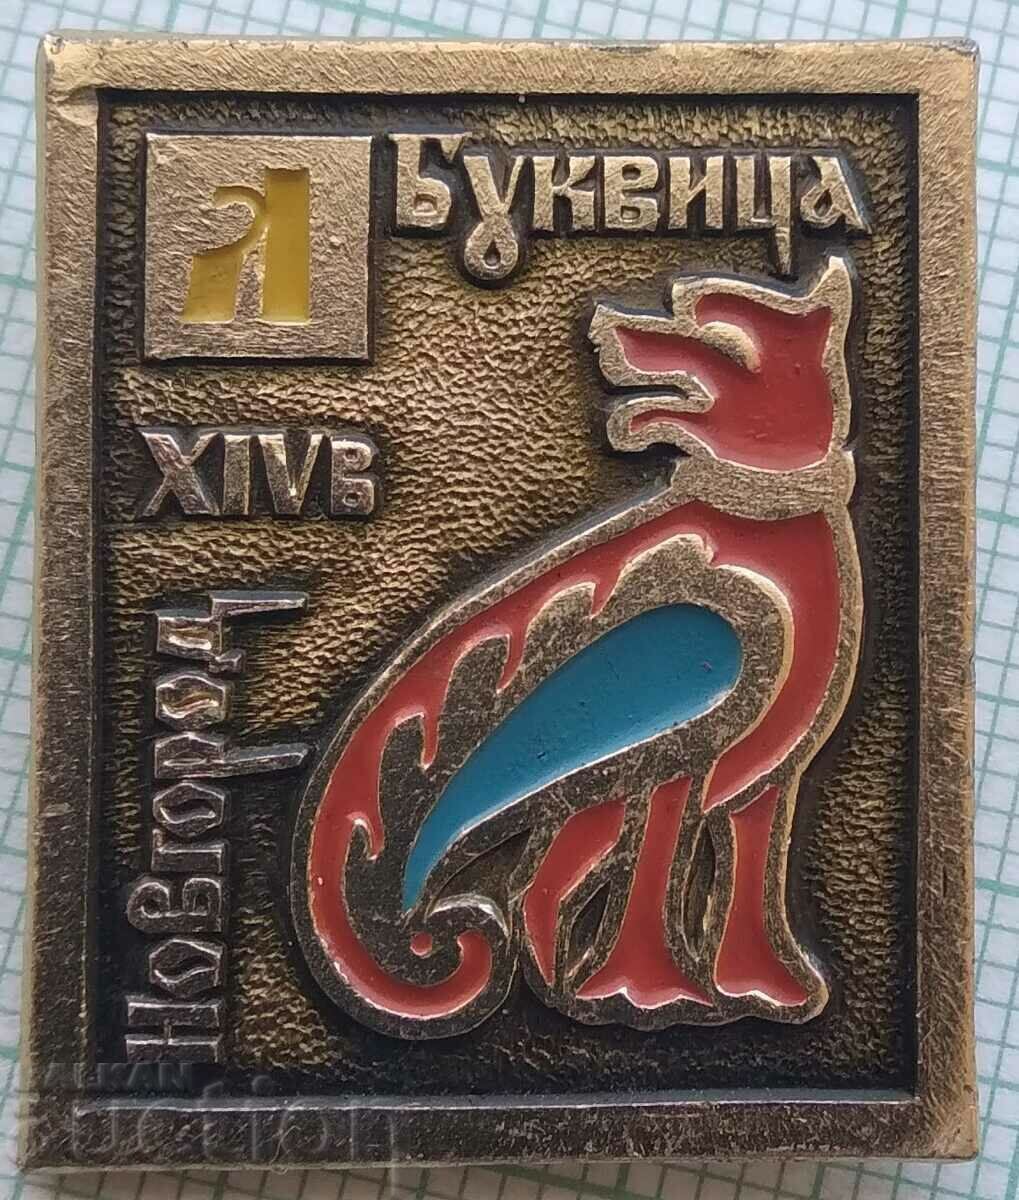 14512 Badge - Novgorod